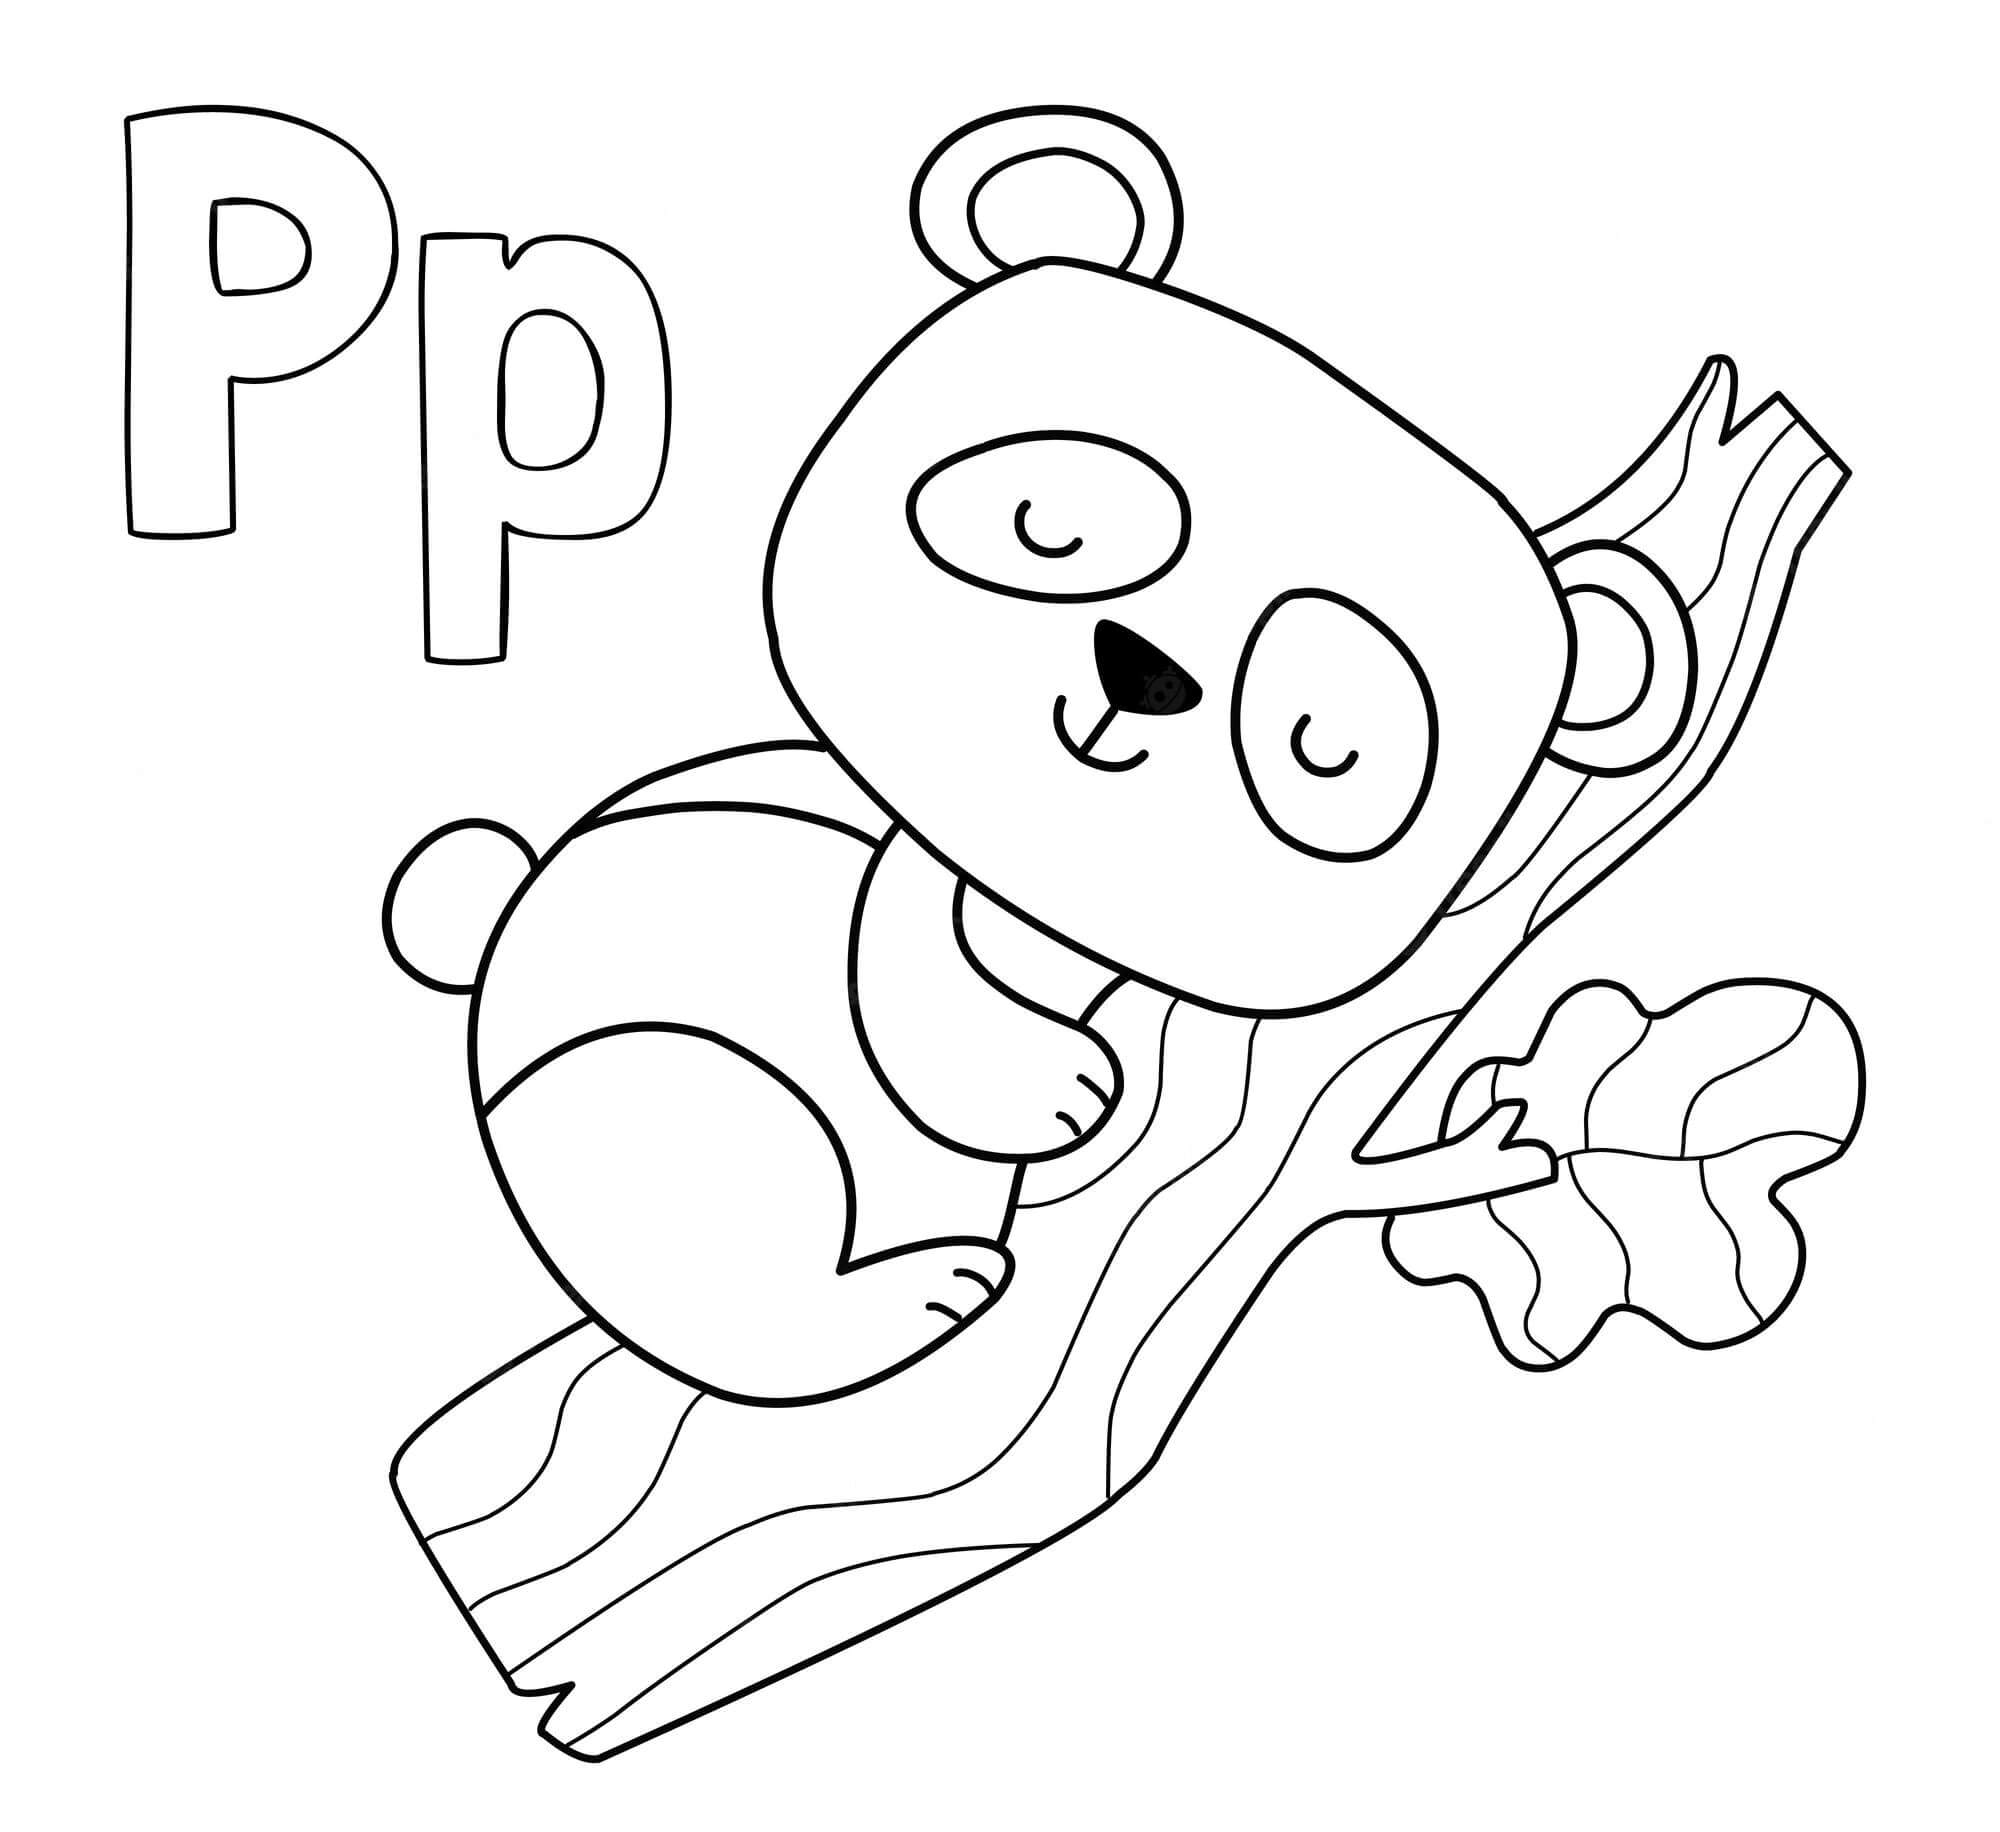 Letra P com Panda para colorir